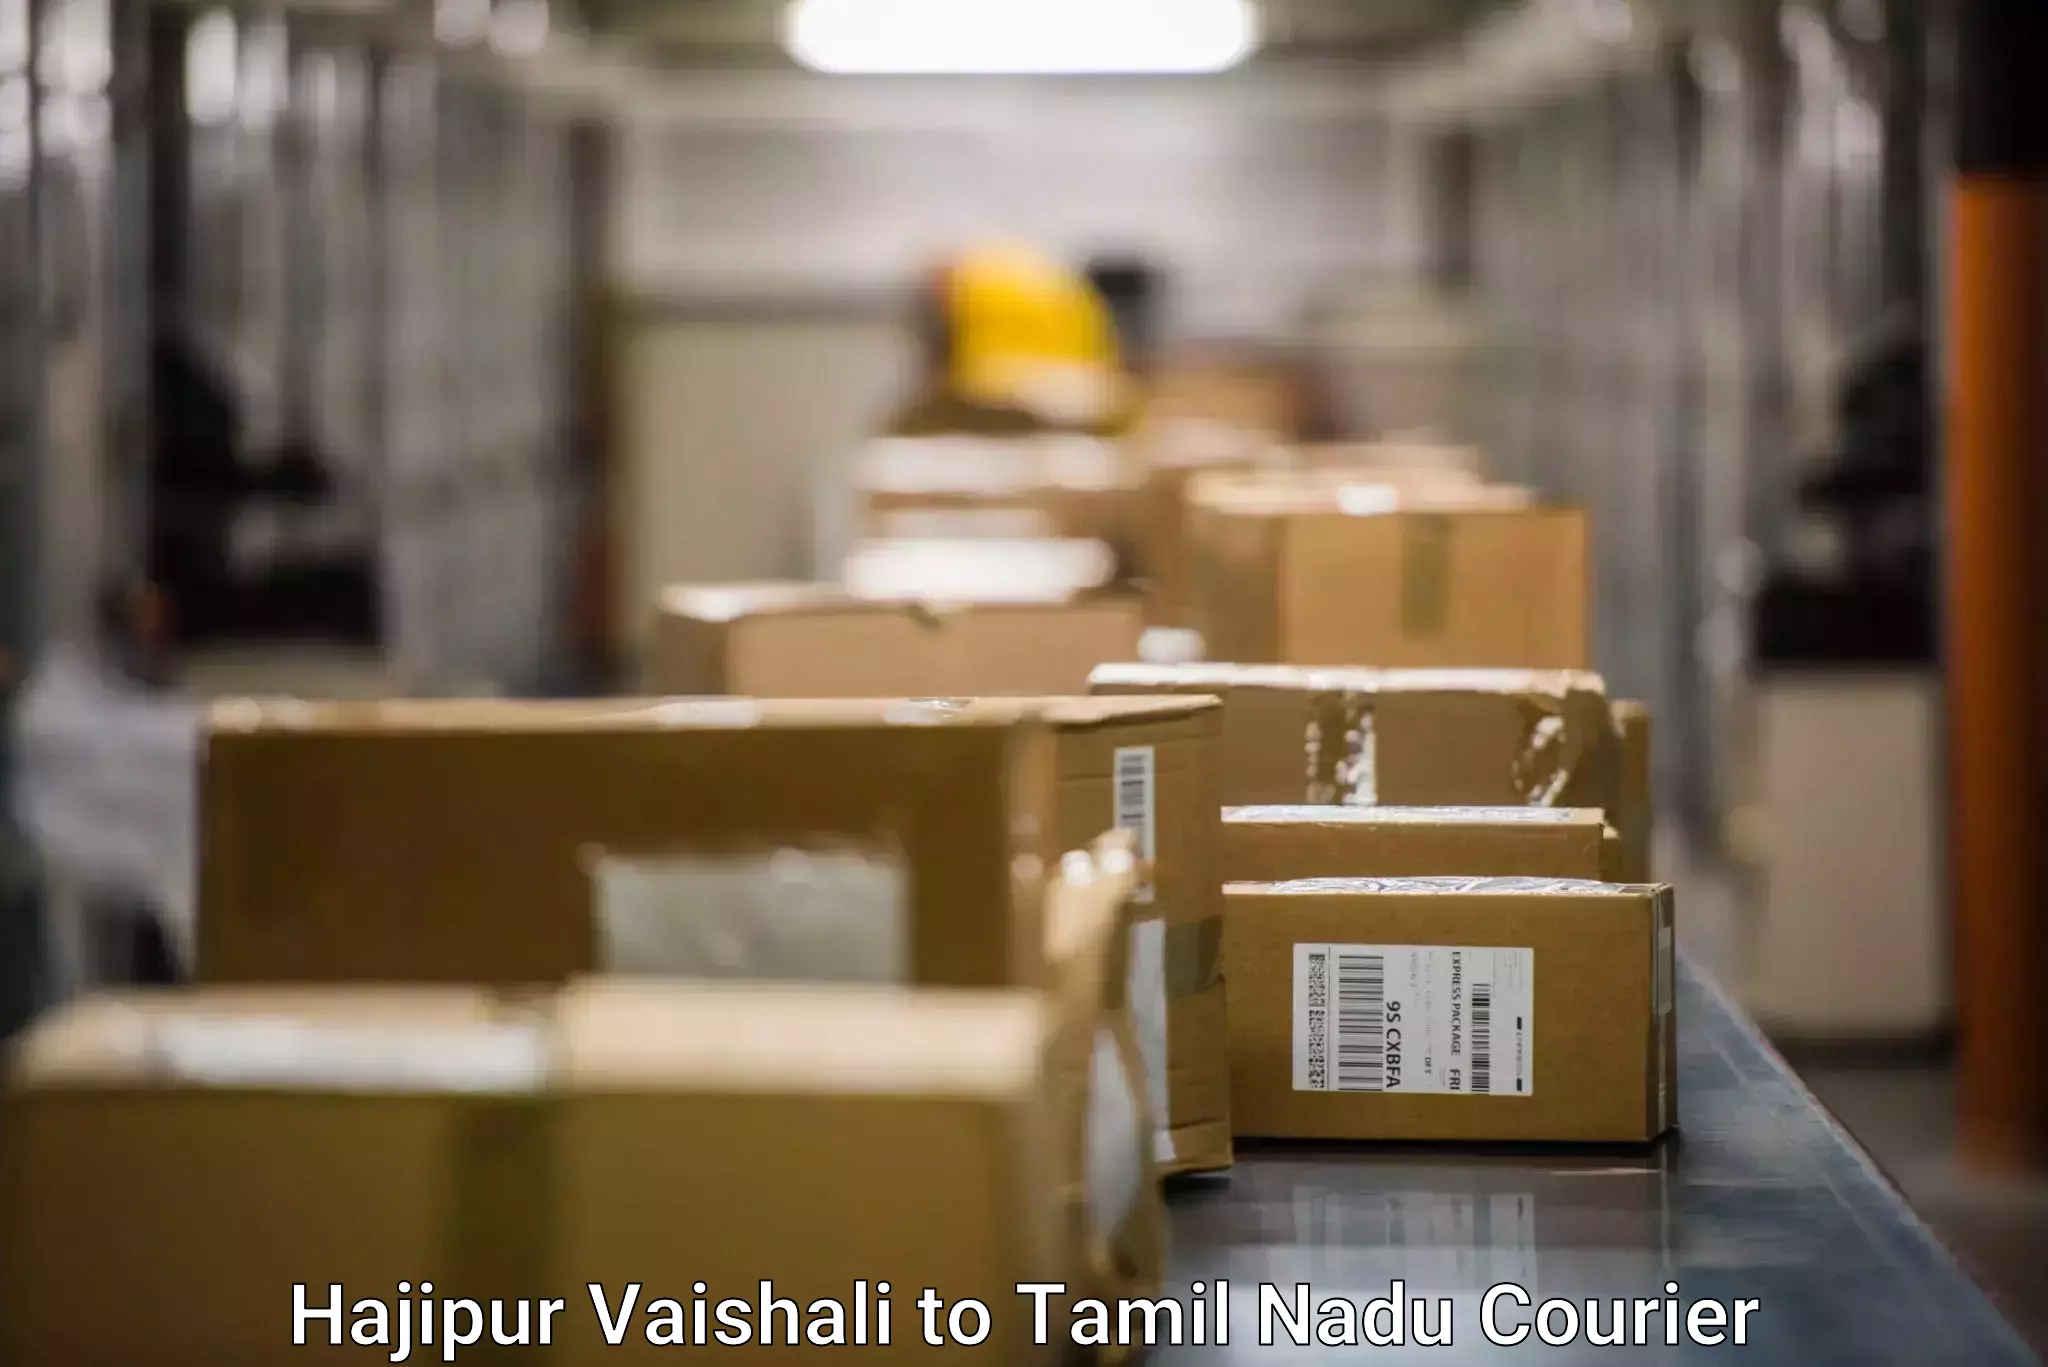 Courier service efficiency Hajipur Vaishali to Chidambaram